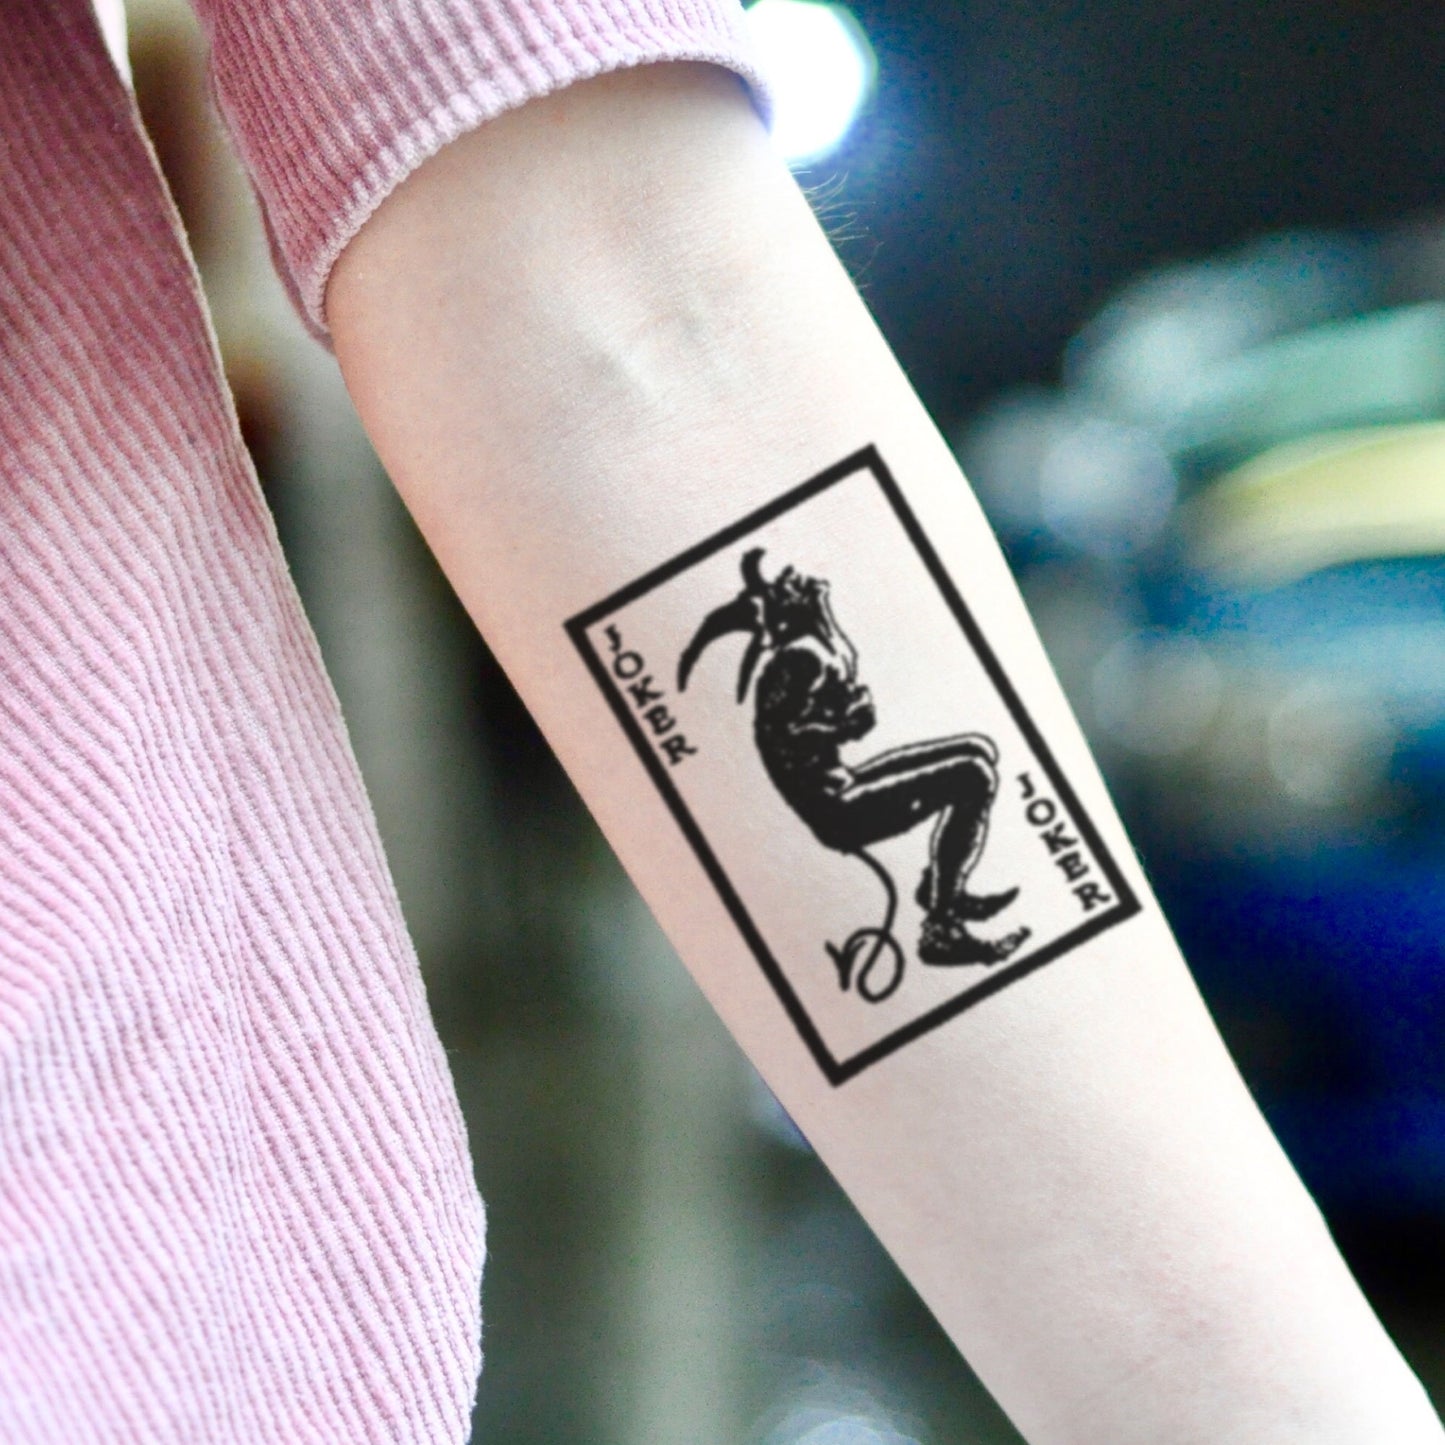 fake small joker playing card illustrative temporary tattoo sticker design idea on inner arm